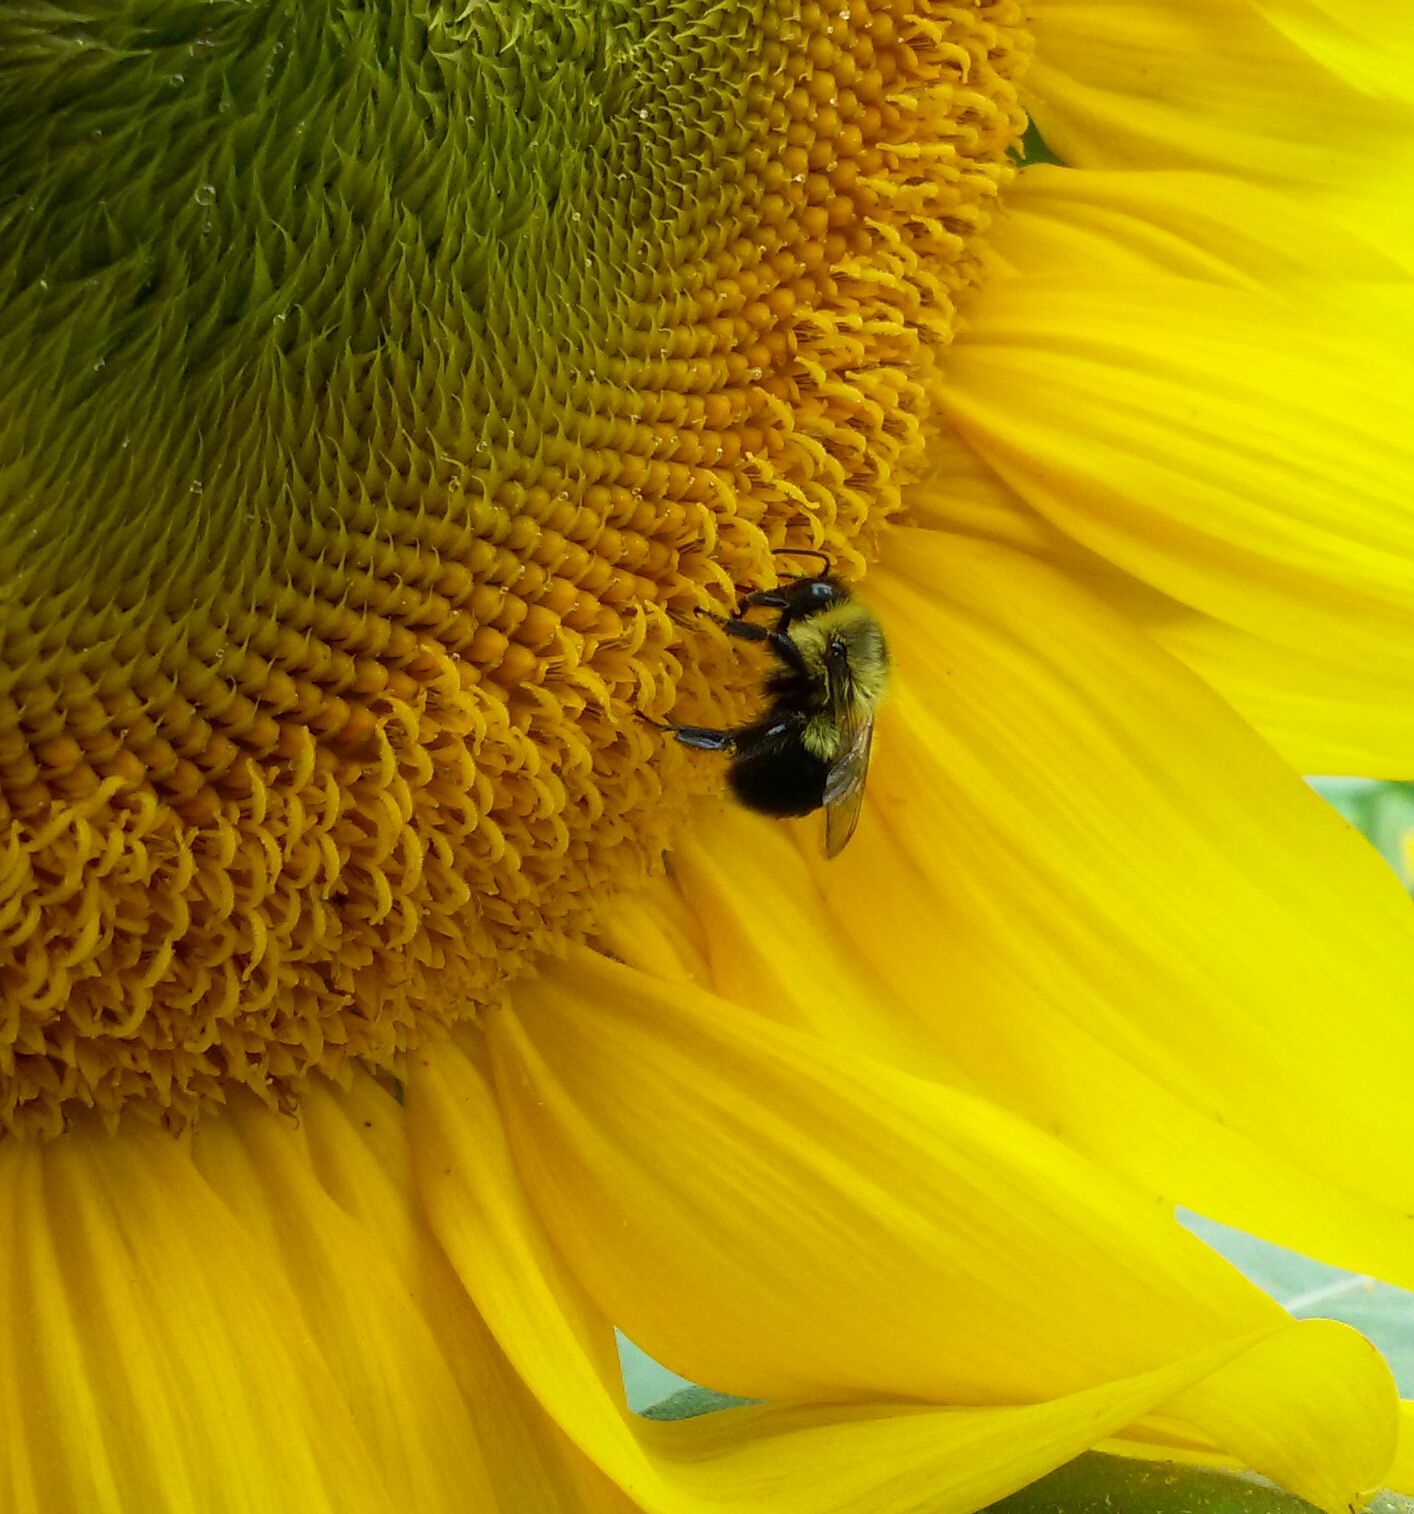 Rhode Island is Buzzing About Pollinators!